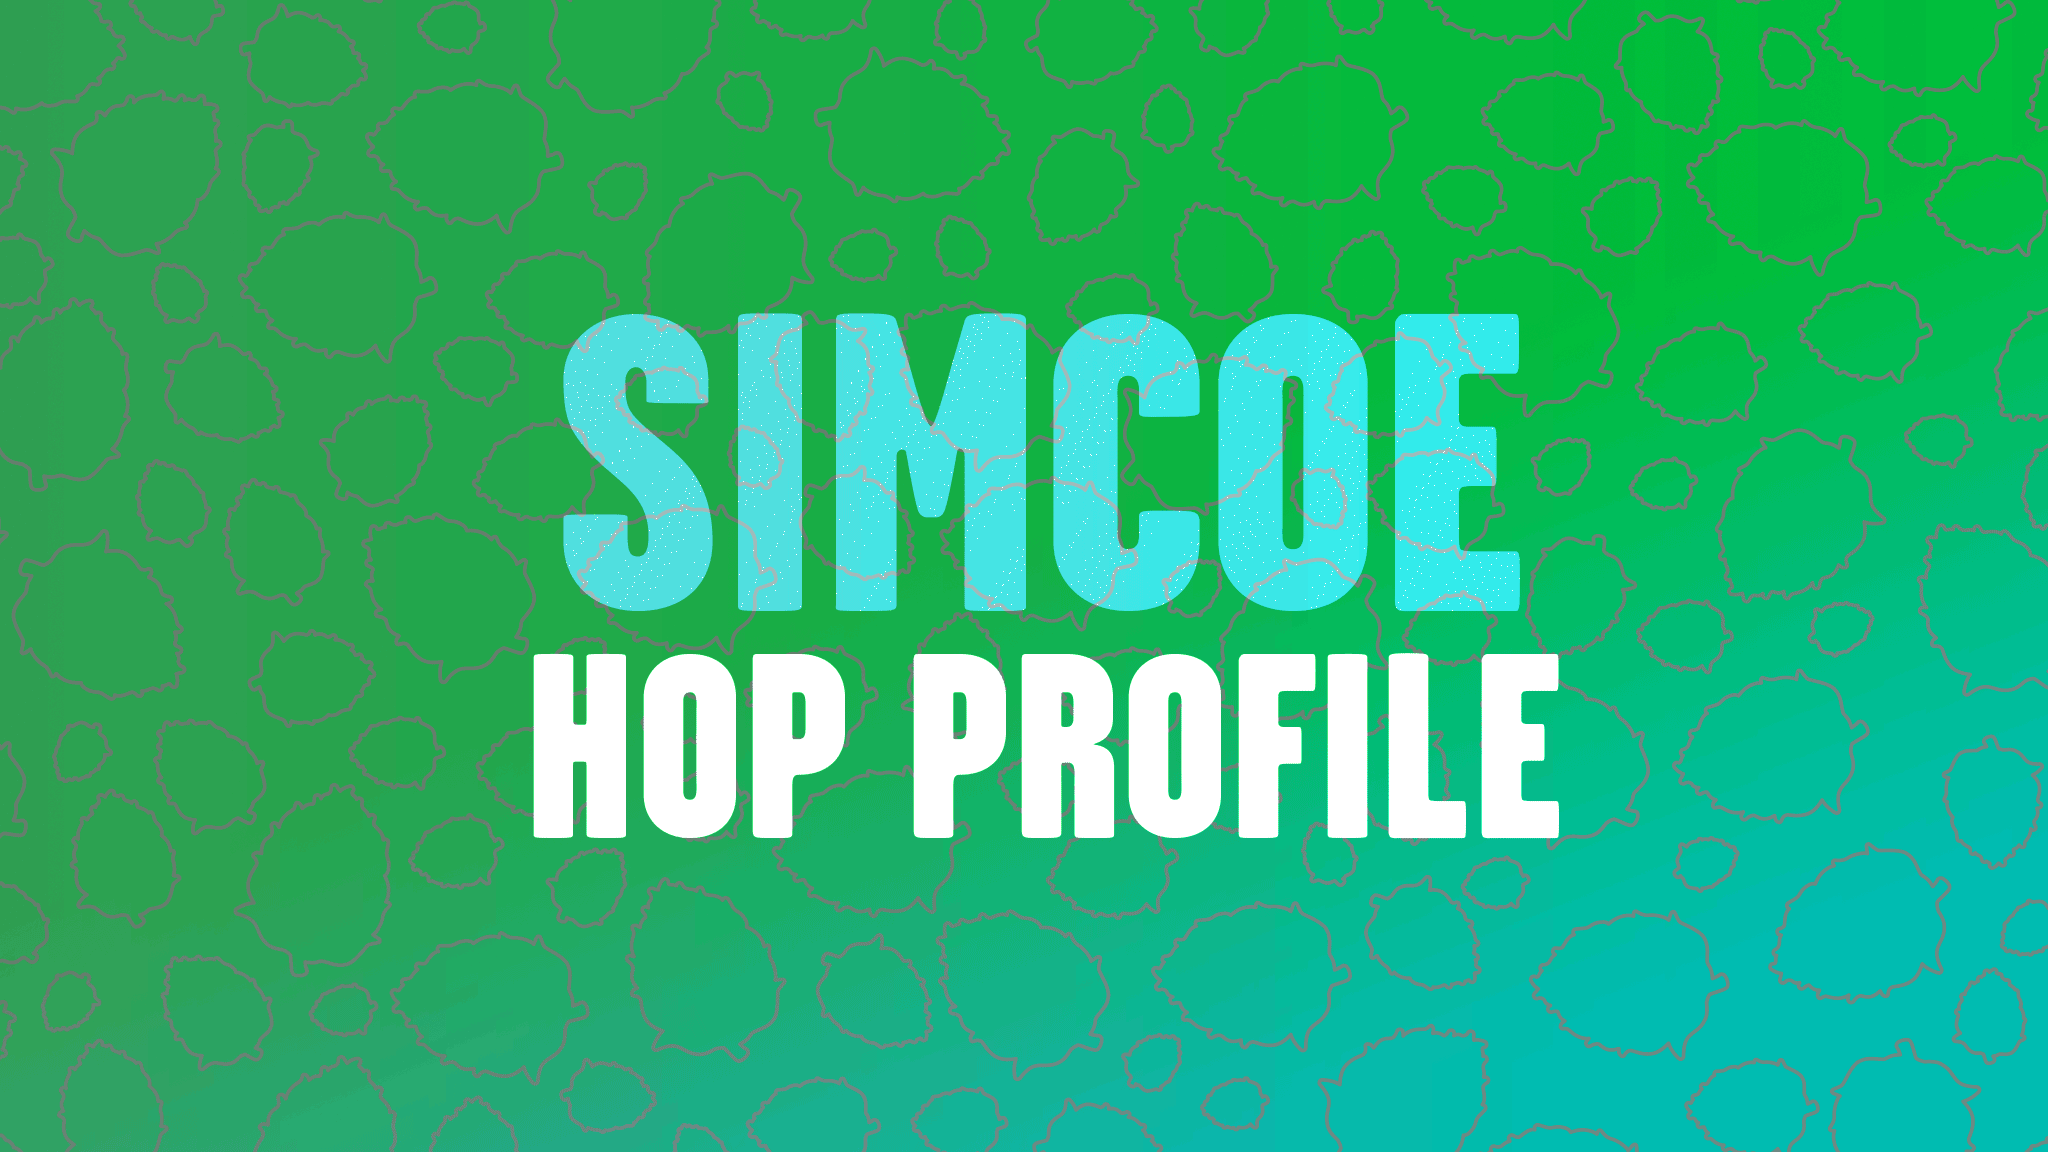 Hop Profile: Simcoe